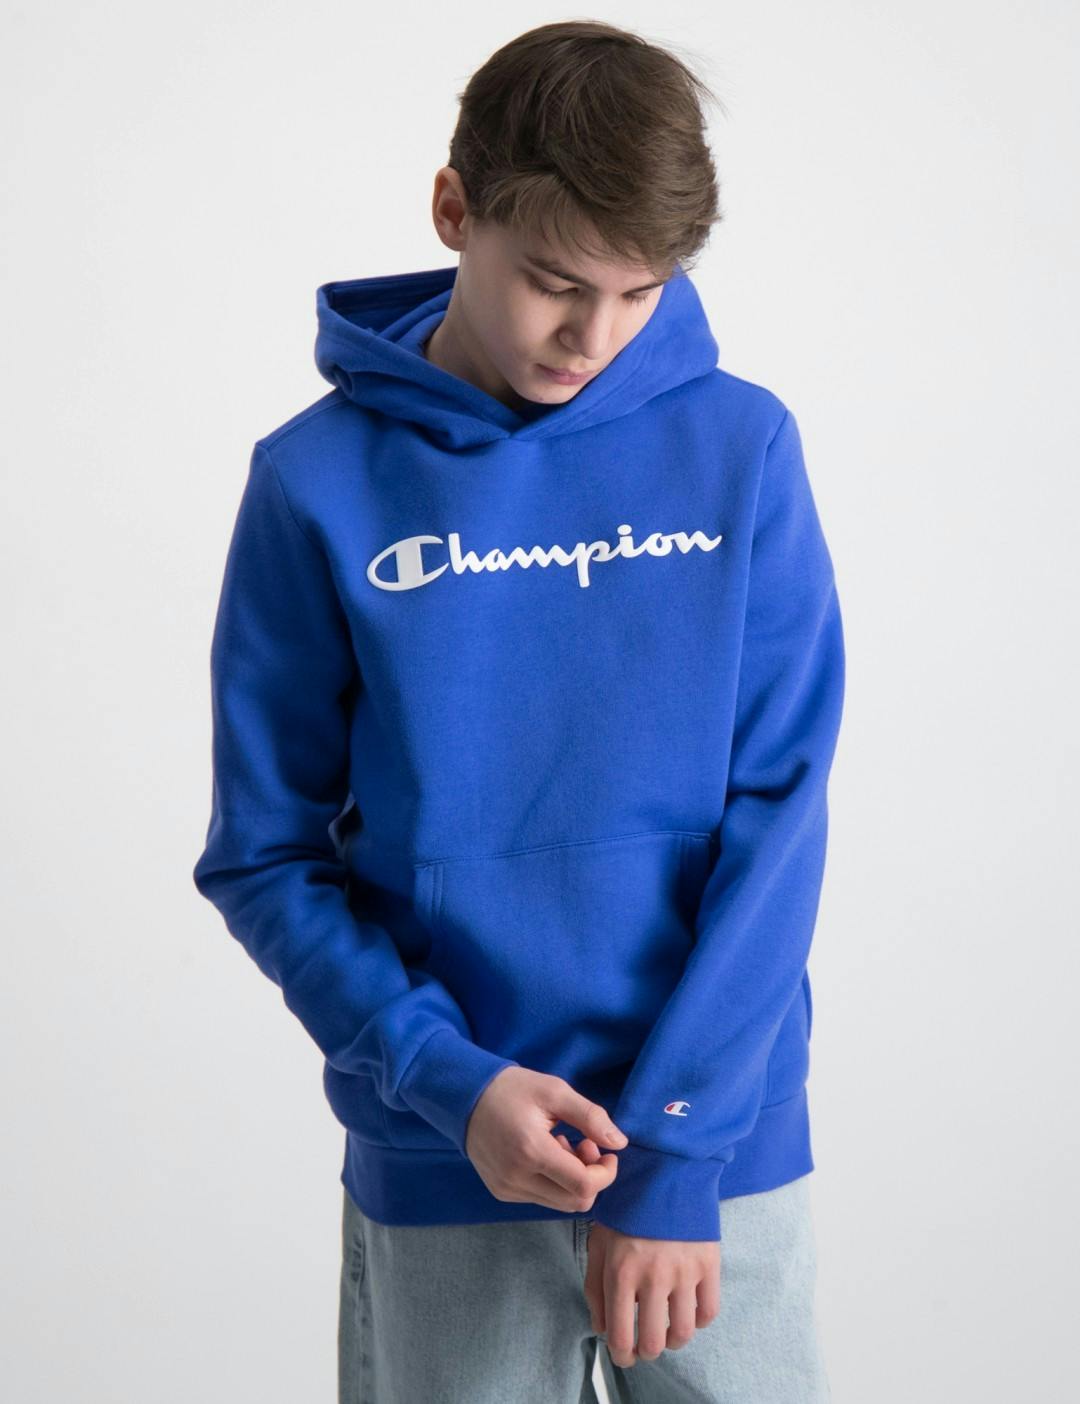 Blå Hooded Sweatshirt för Kille | Kids Brand Store